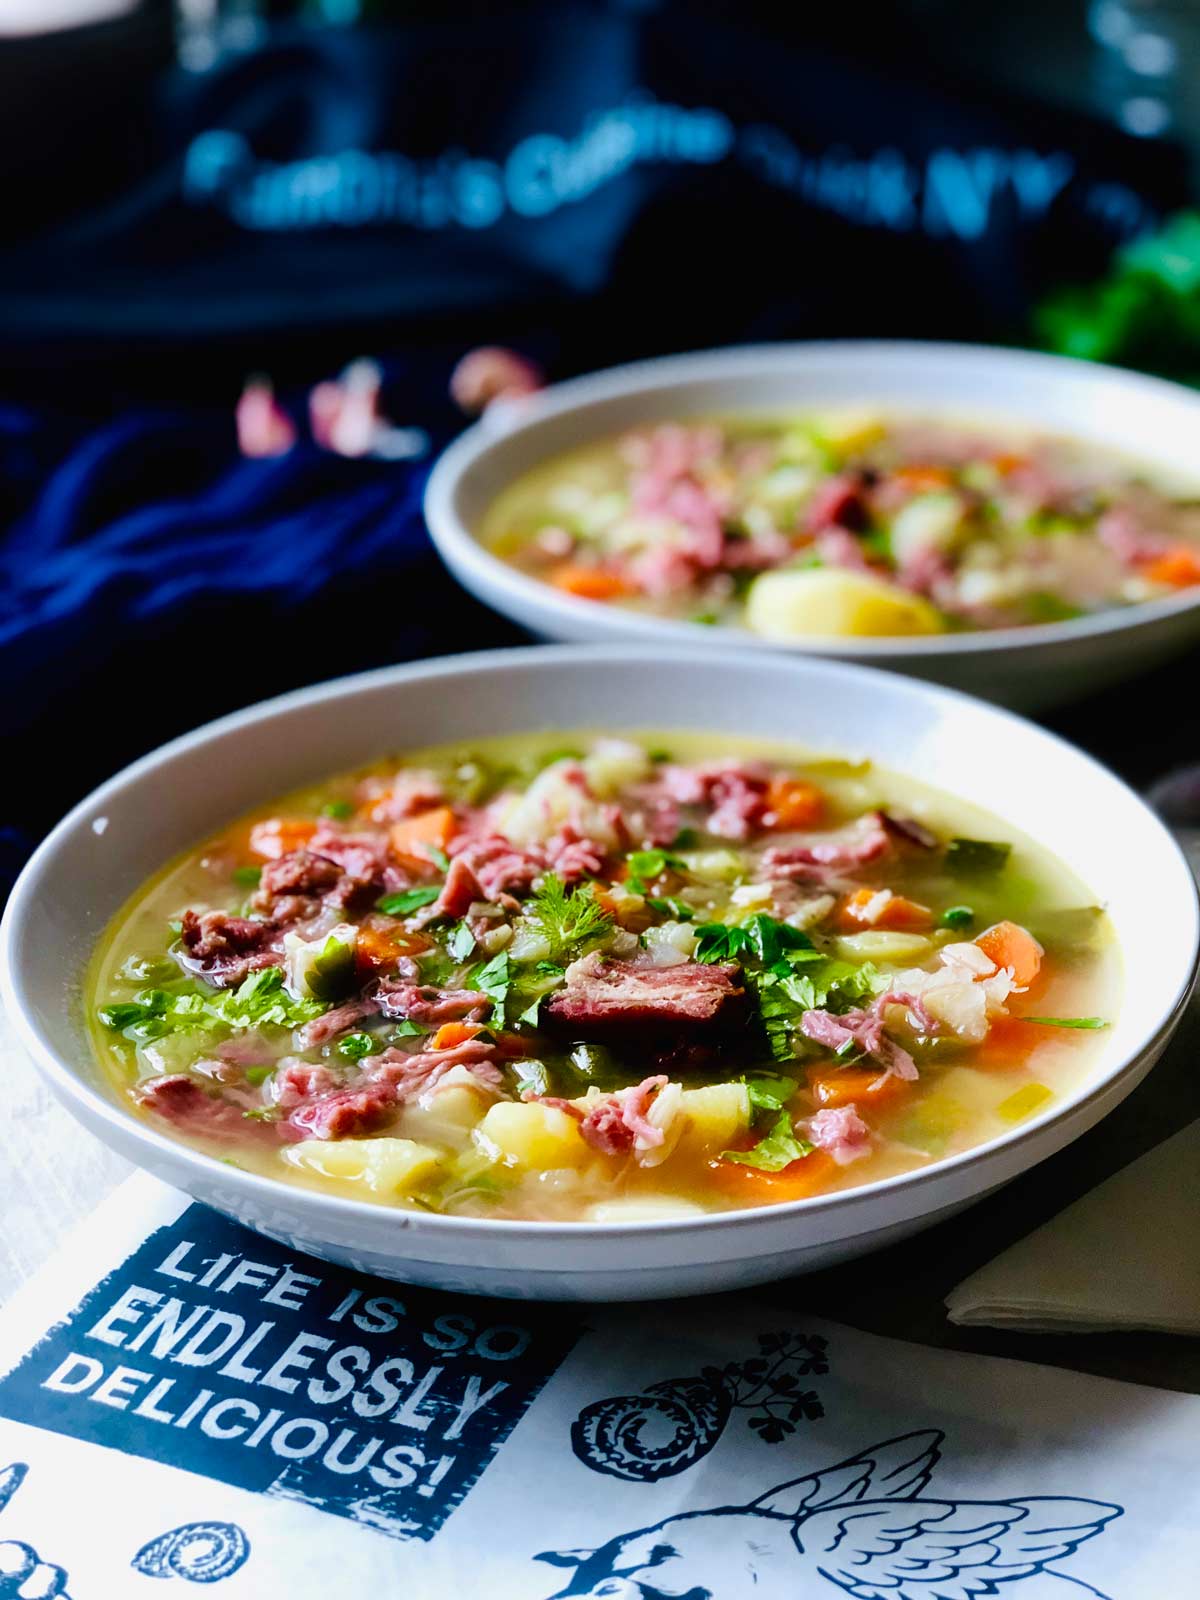 Potato soup with ham hock and petit pois (garden peas)